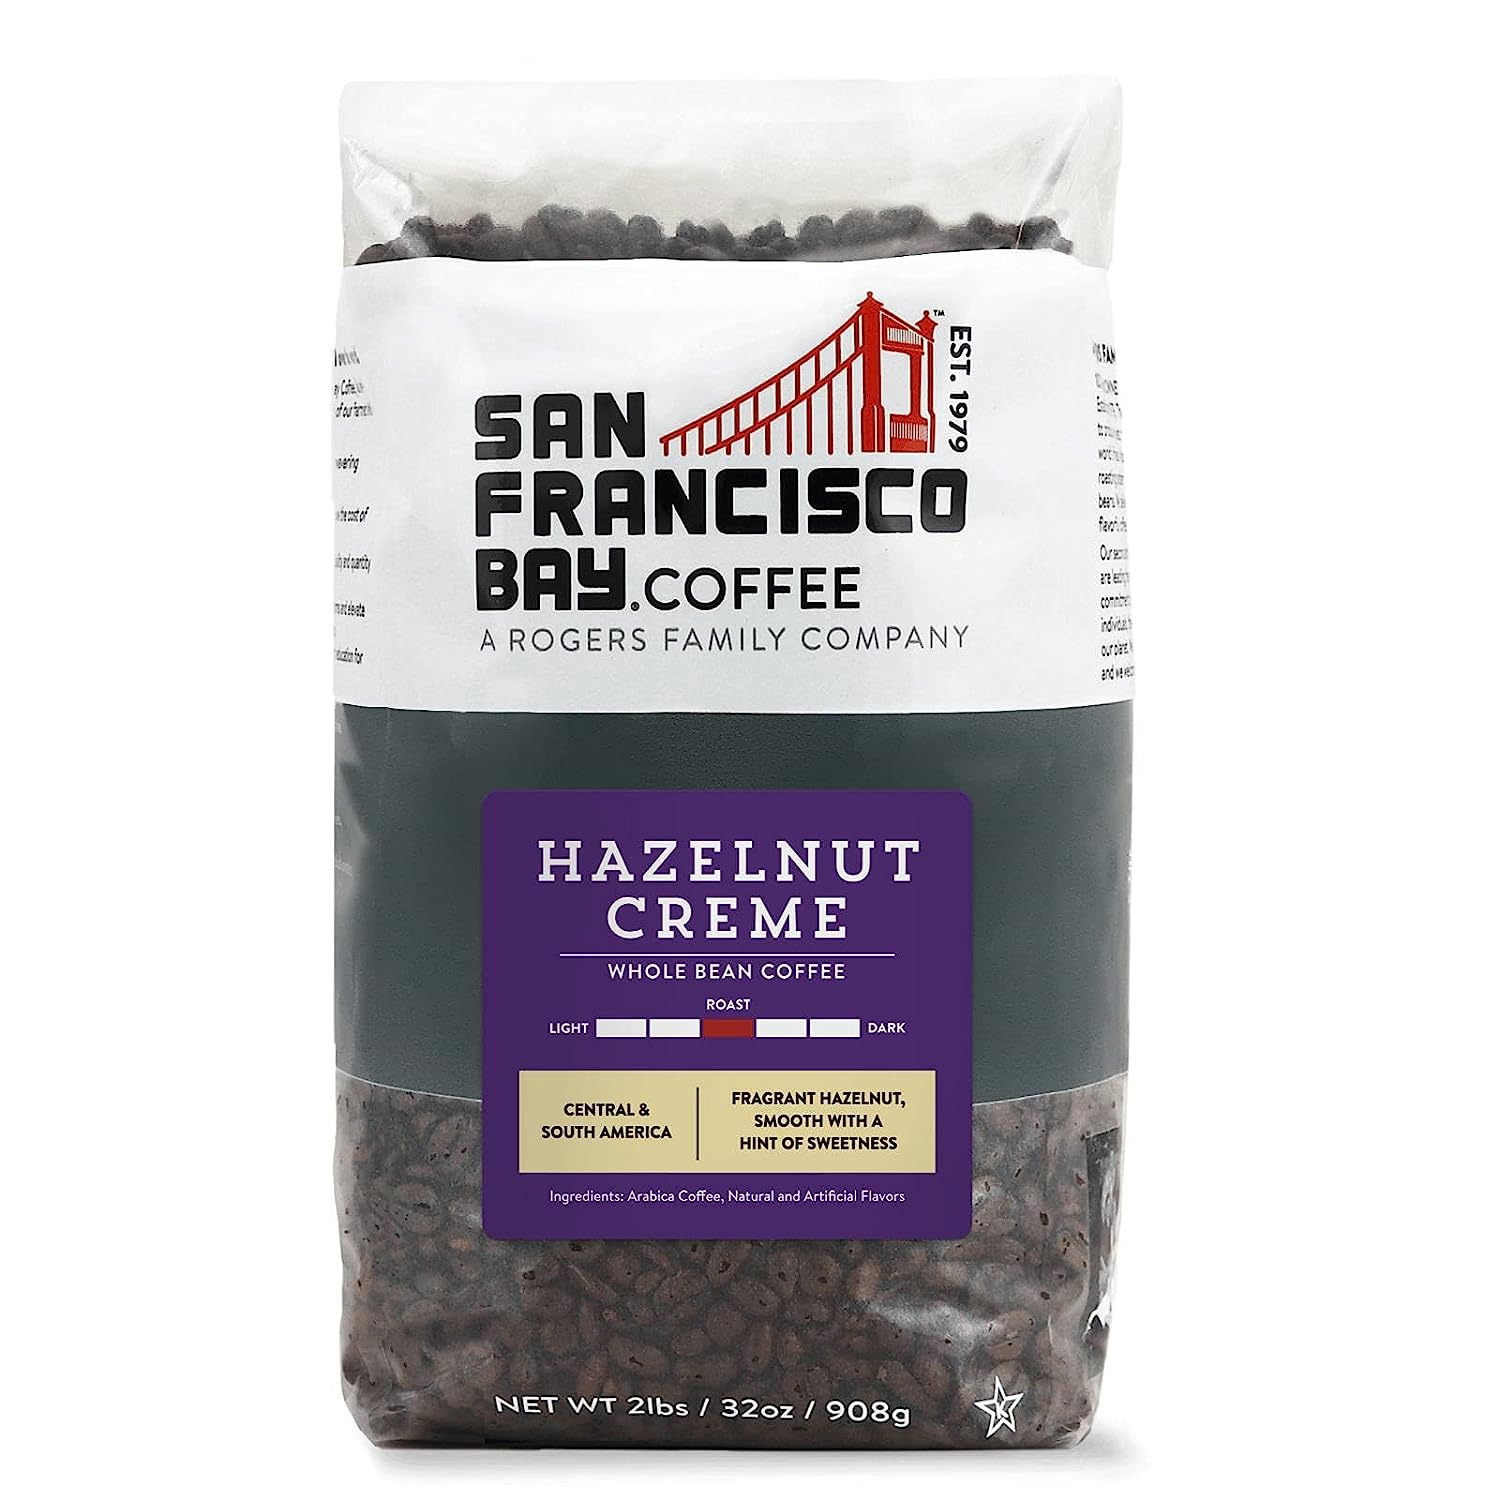 San Francisco Bay Whole Bean Coffee - Hazelnut Crème (Bag), Flavored, Medium Roast